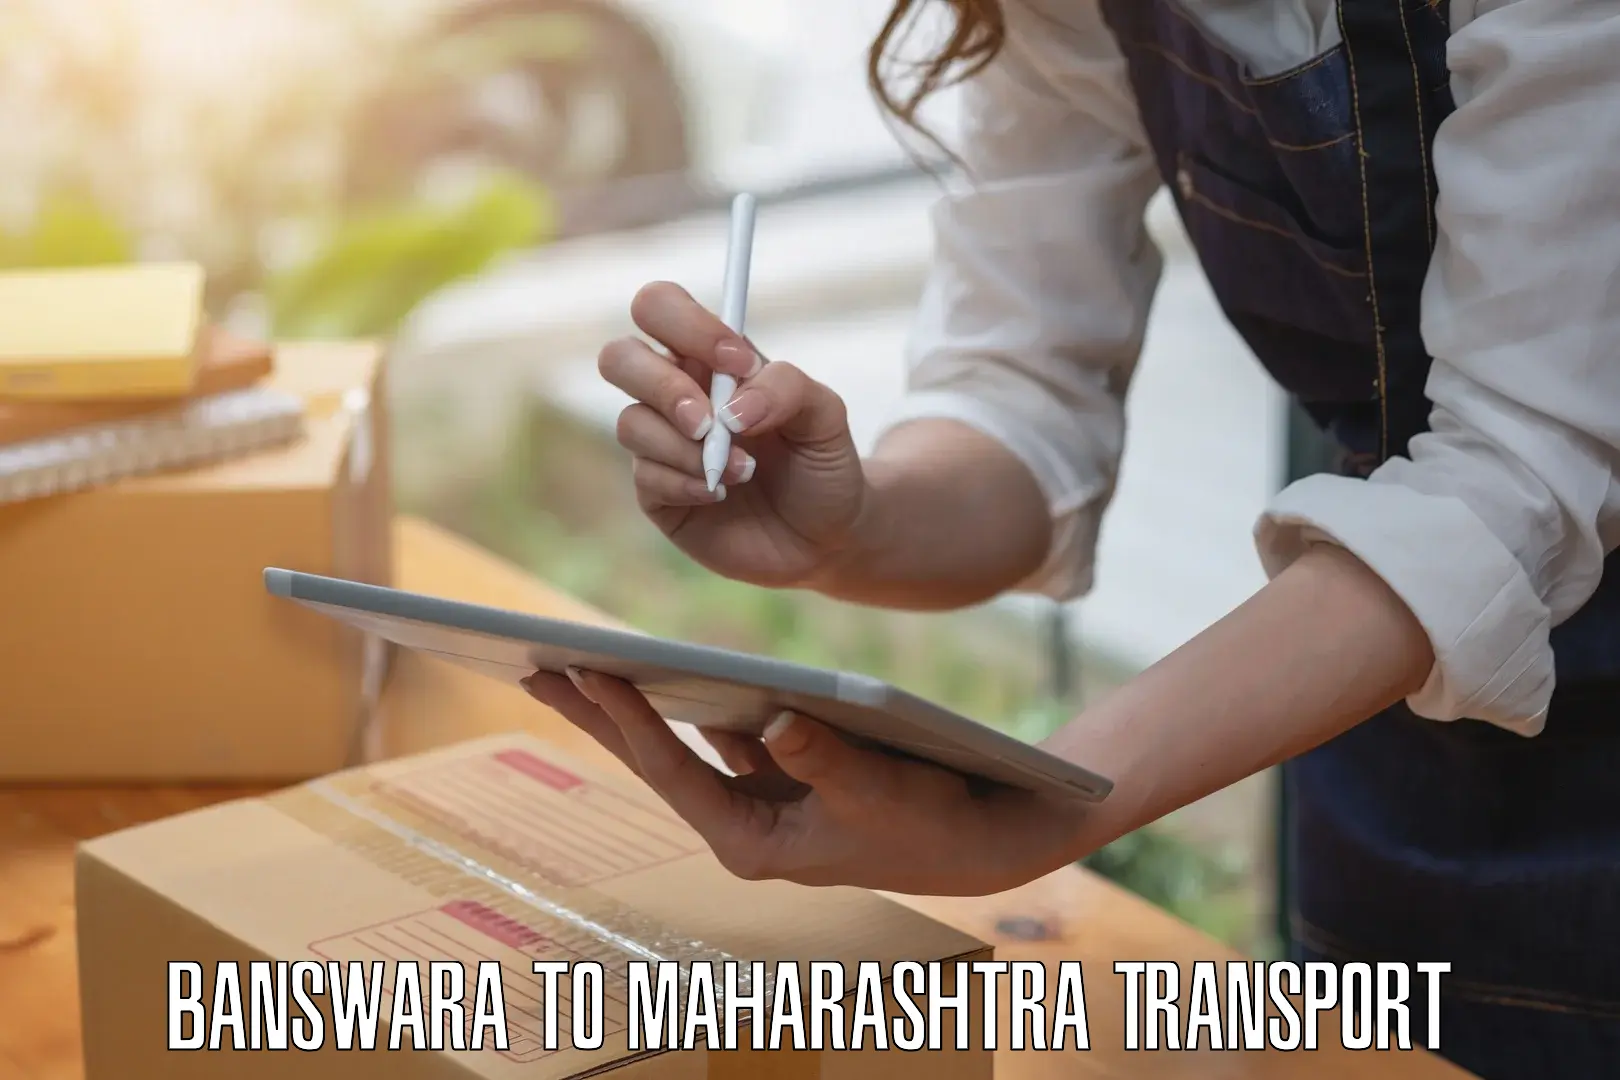 Cycle transportation service Banswara to Maharashtra